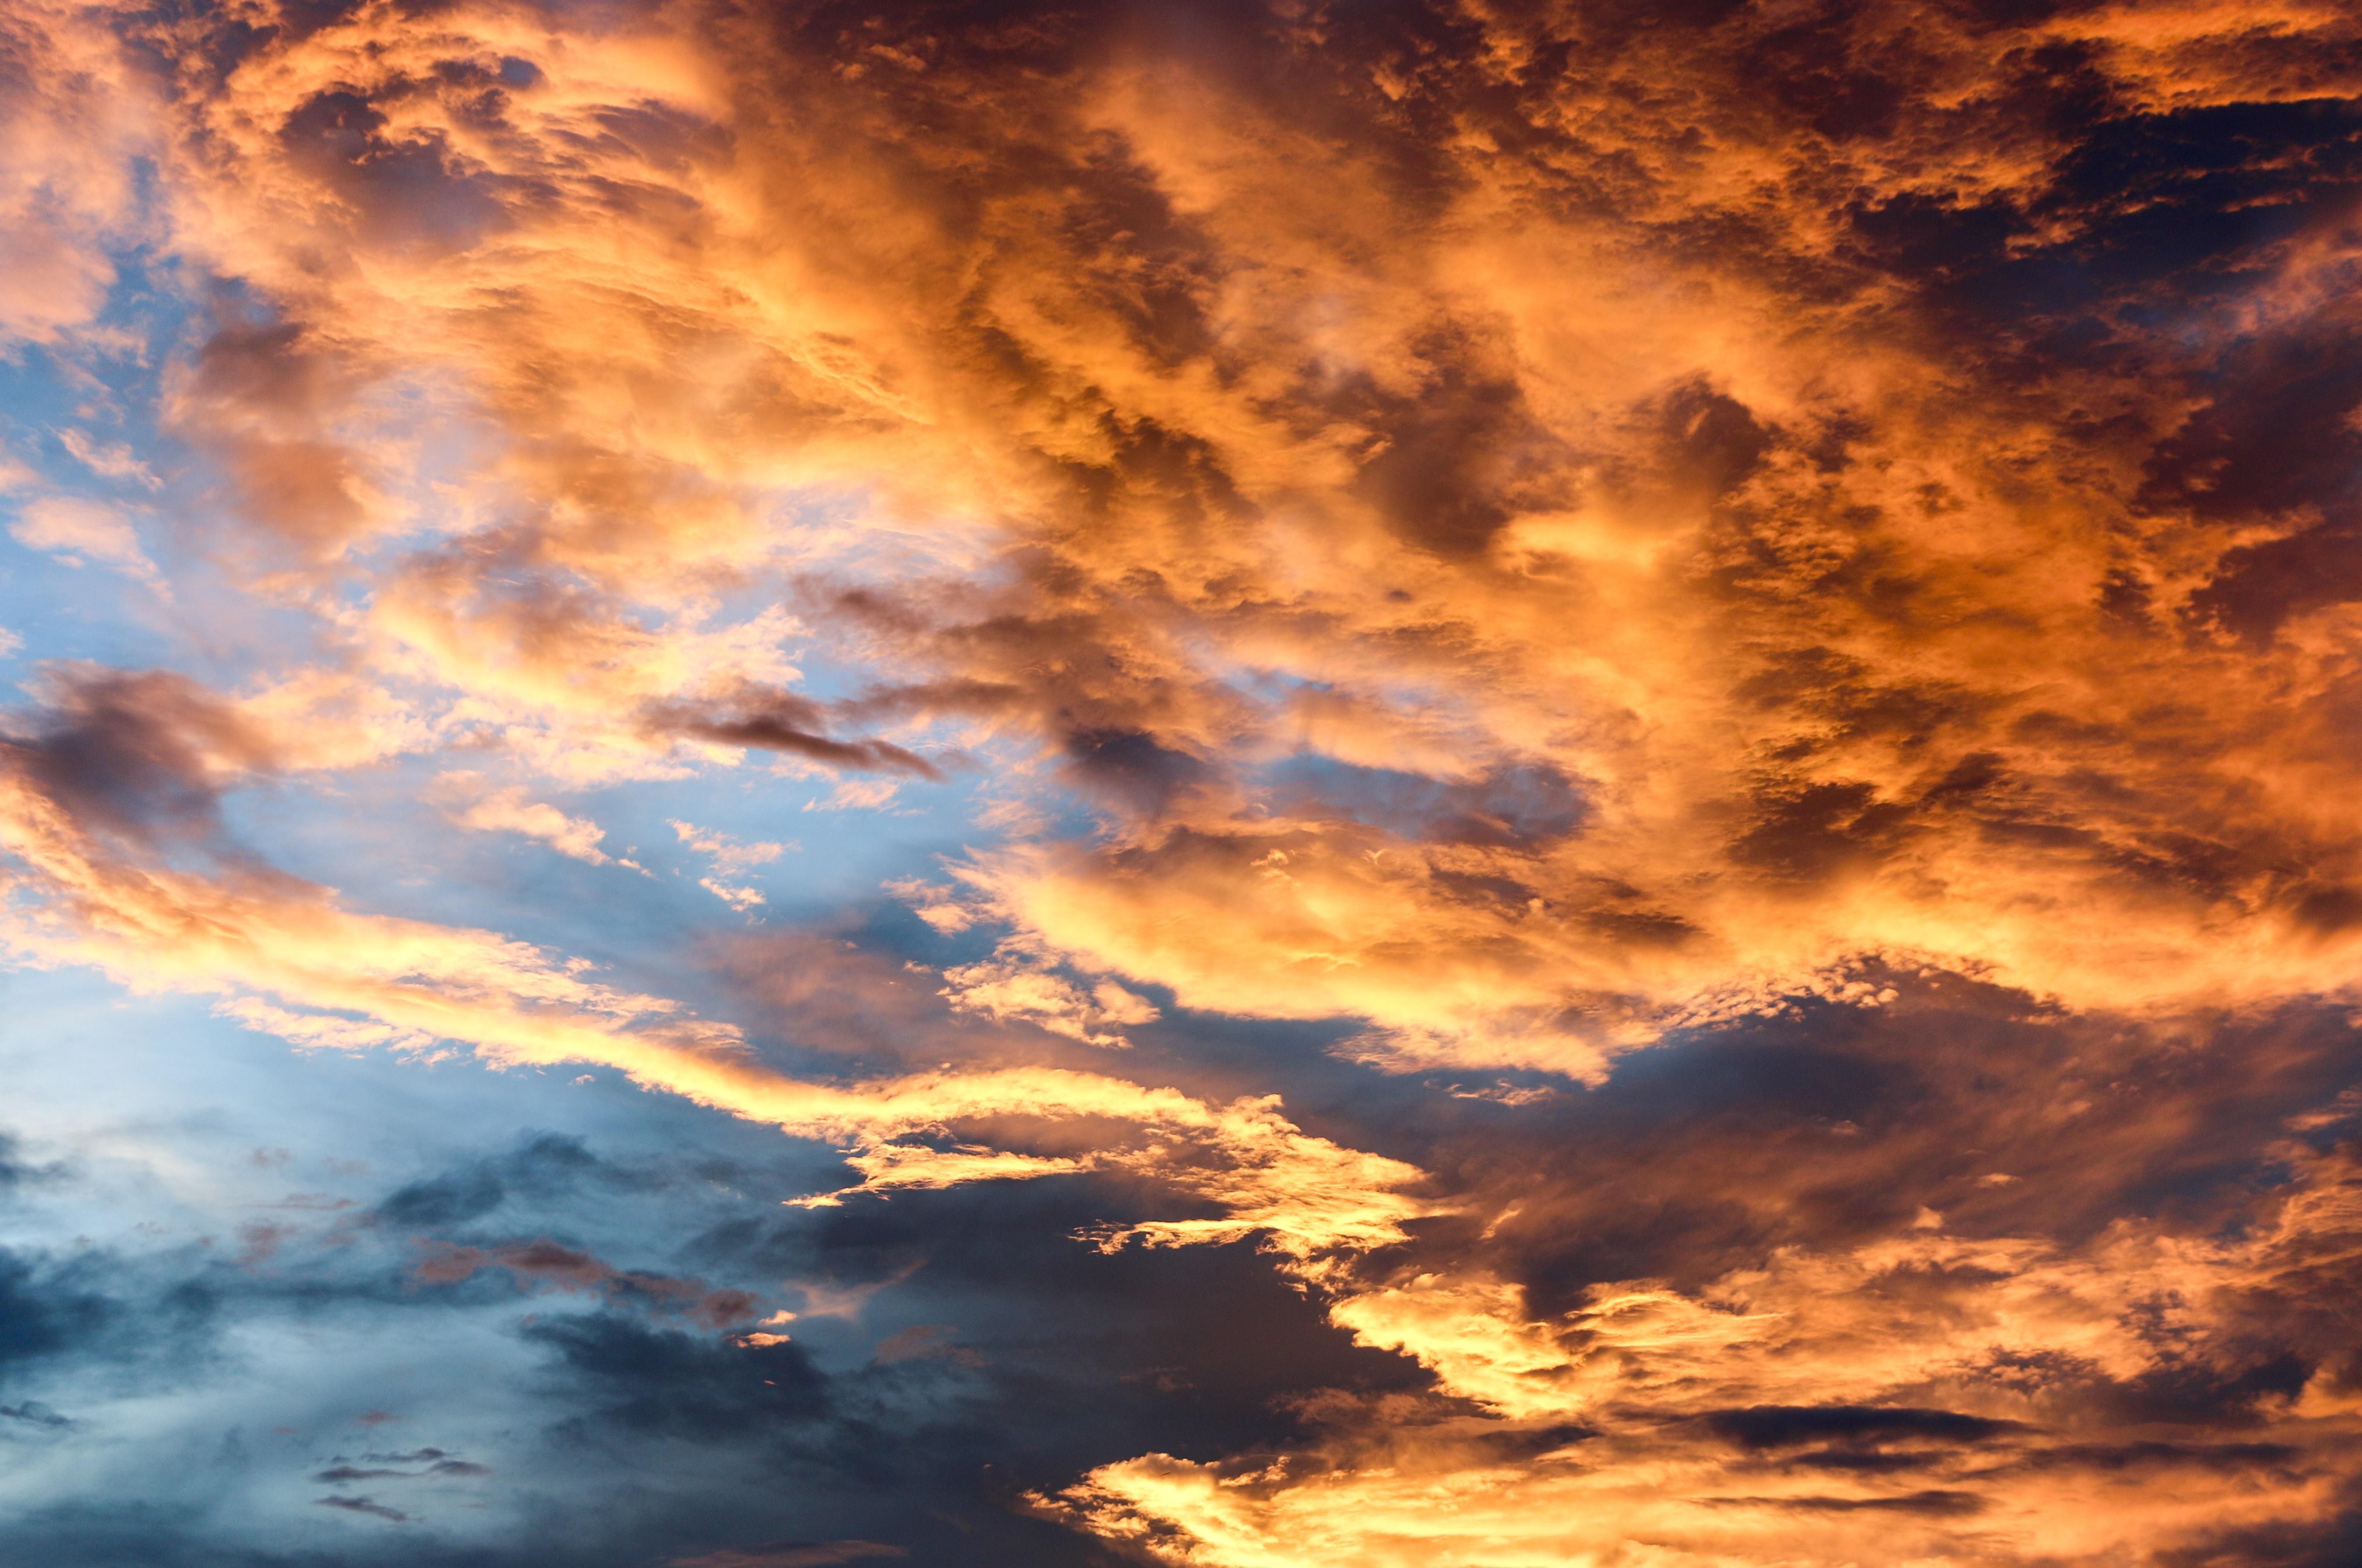 Sunset Cloud Wallpaper, Free Stock Wallpaper